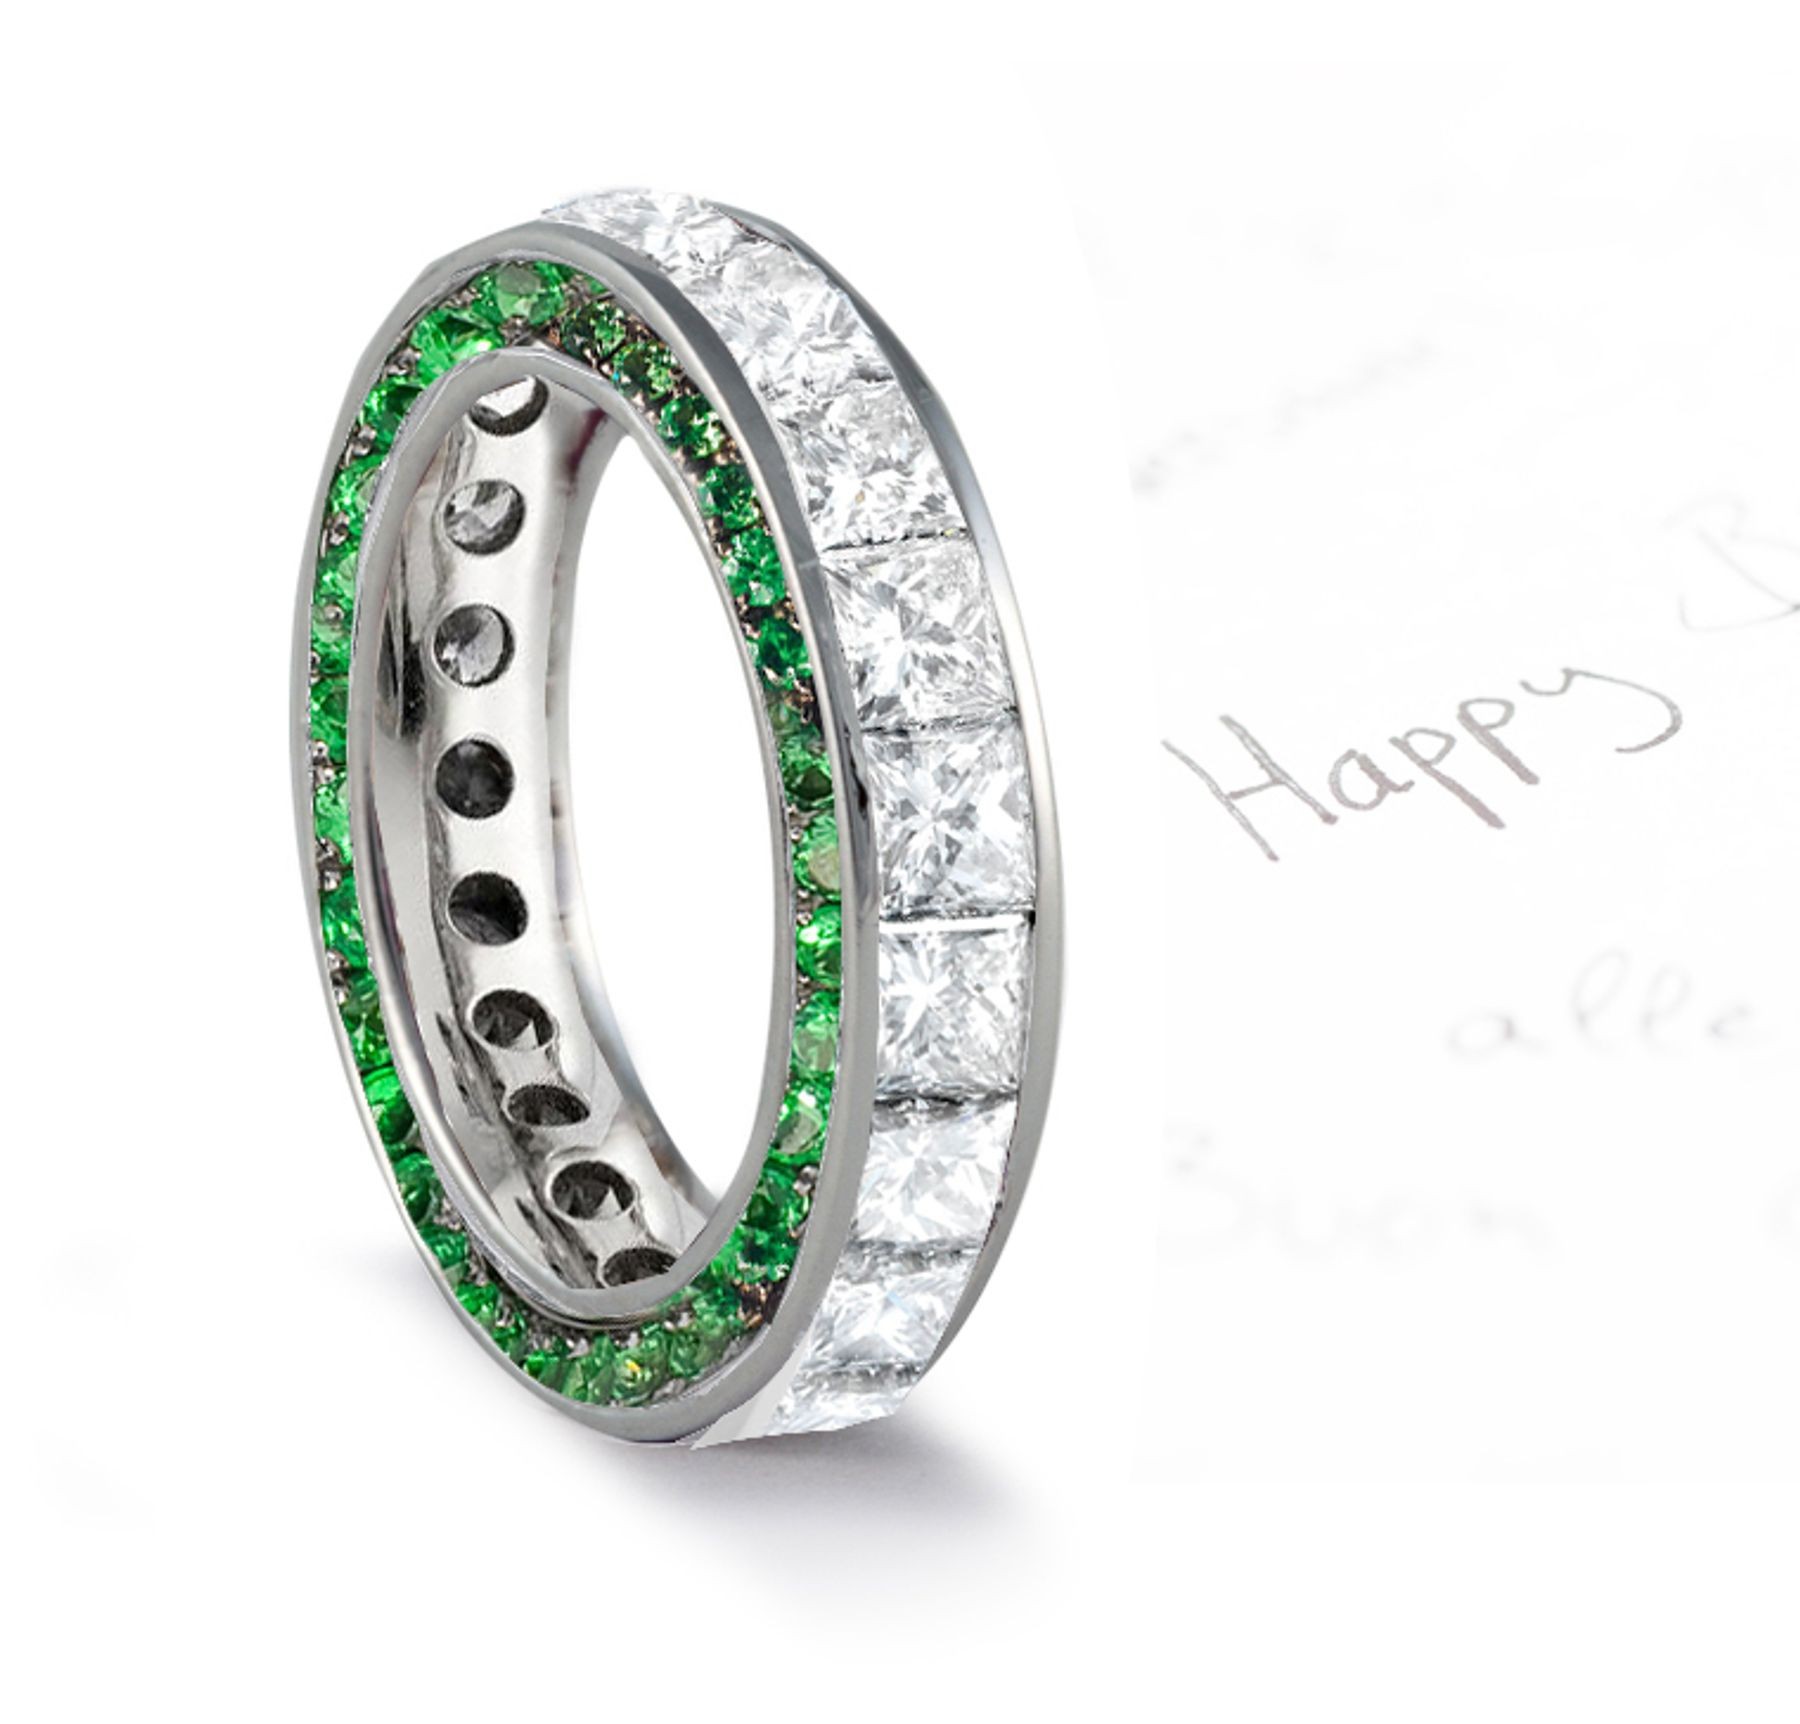 Micro pave Halo  Round Cut Diamond & Lush Green Emerald Eternity Rings